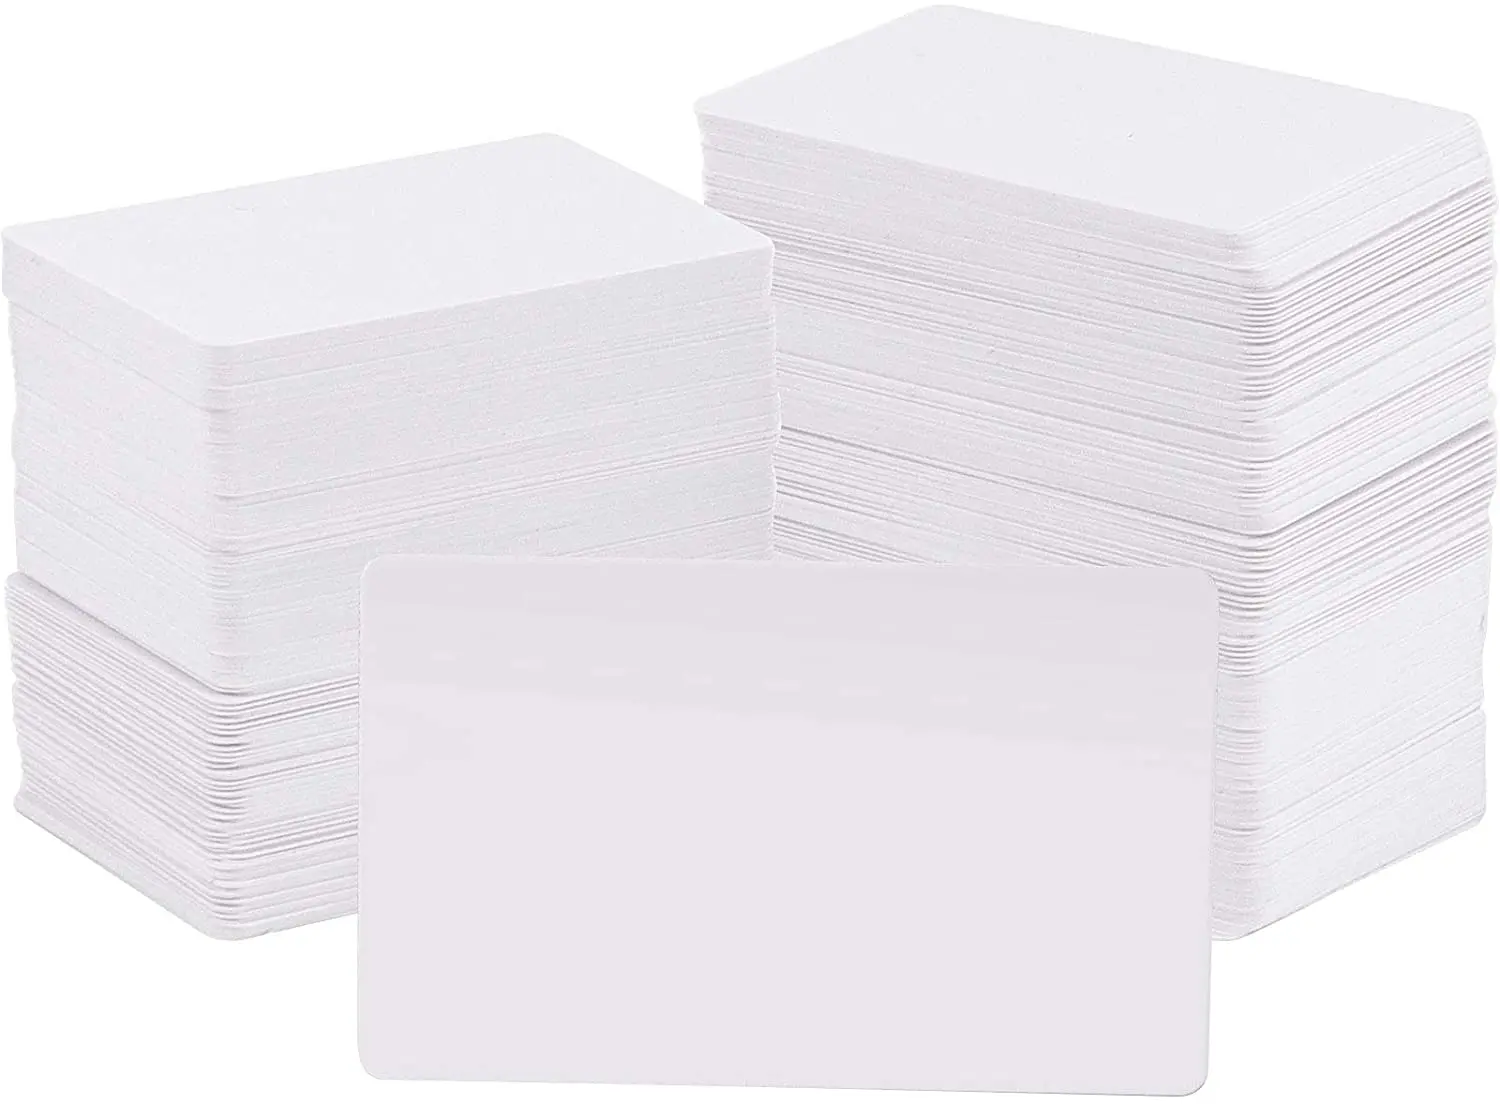 200pcs Premium Blank PVC Cards for ID Badge Printers Graphic Quality White Plastic CR80 30 Mil for Zebra Fargo,Magicard Printers